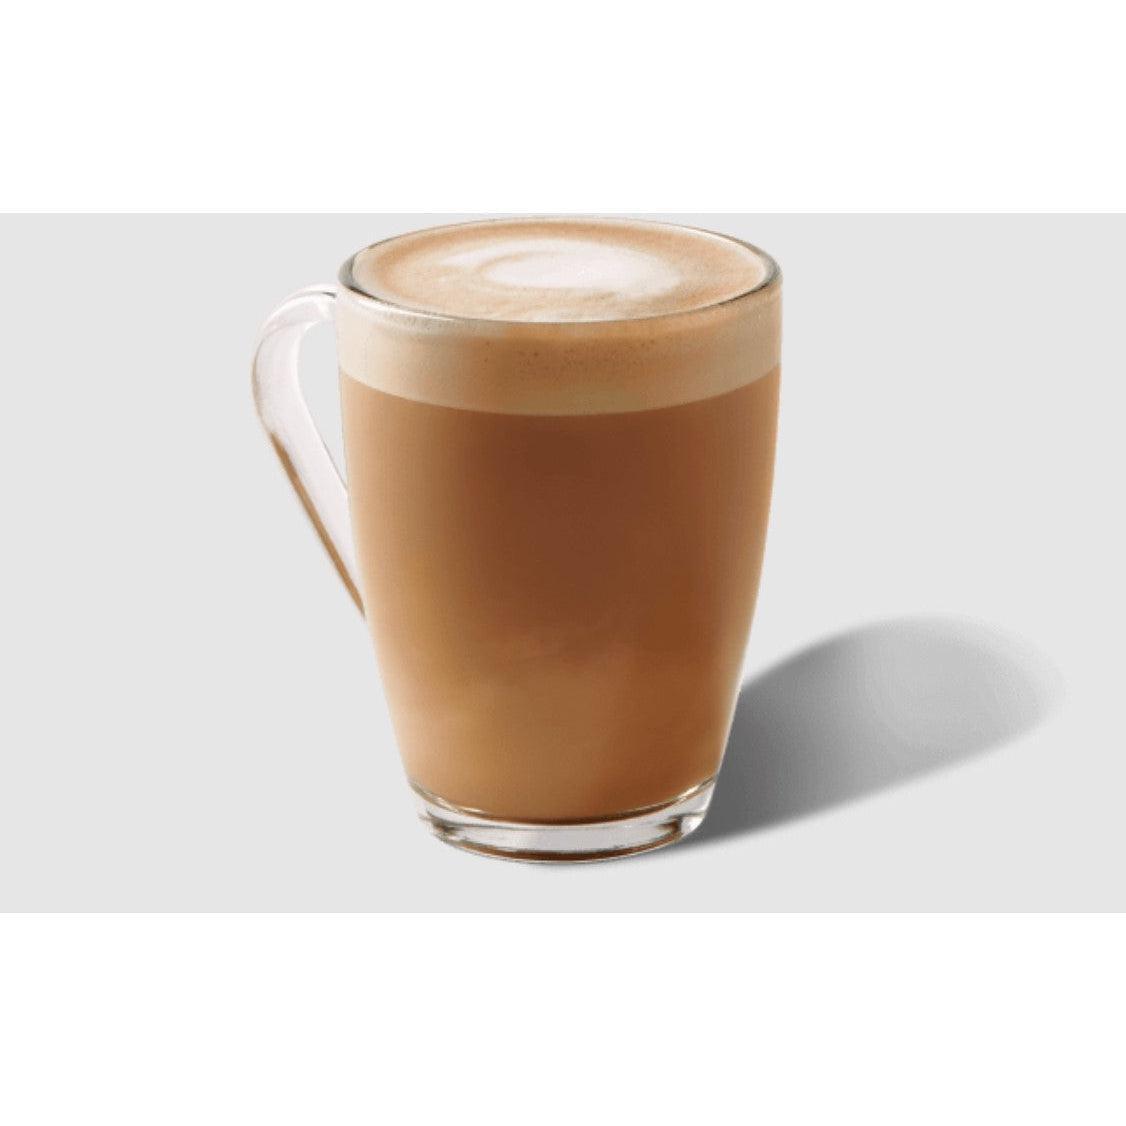 Starbucks Caramel Latte Premium Mixes 4 Sticks